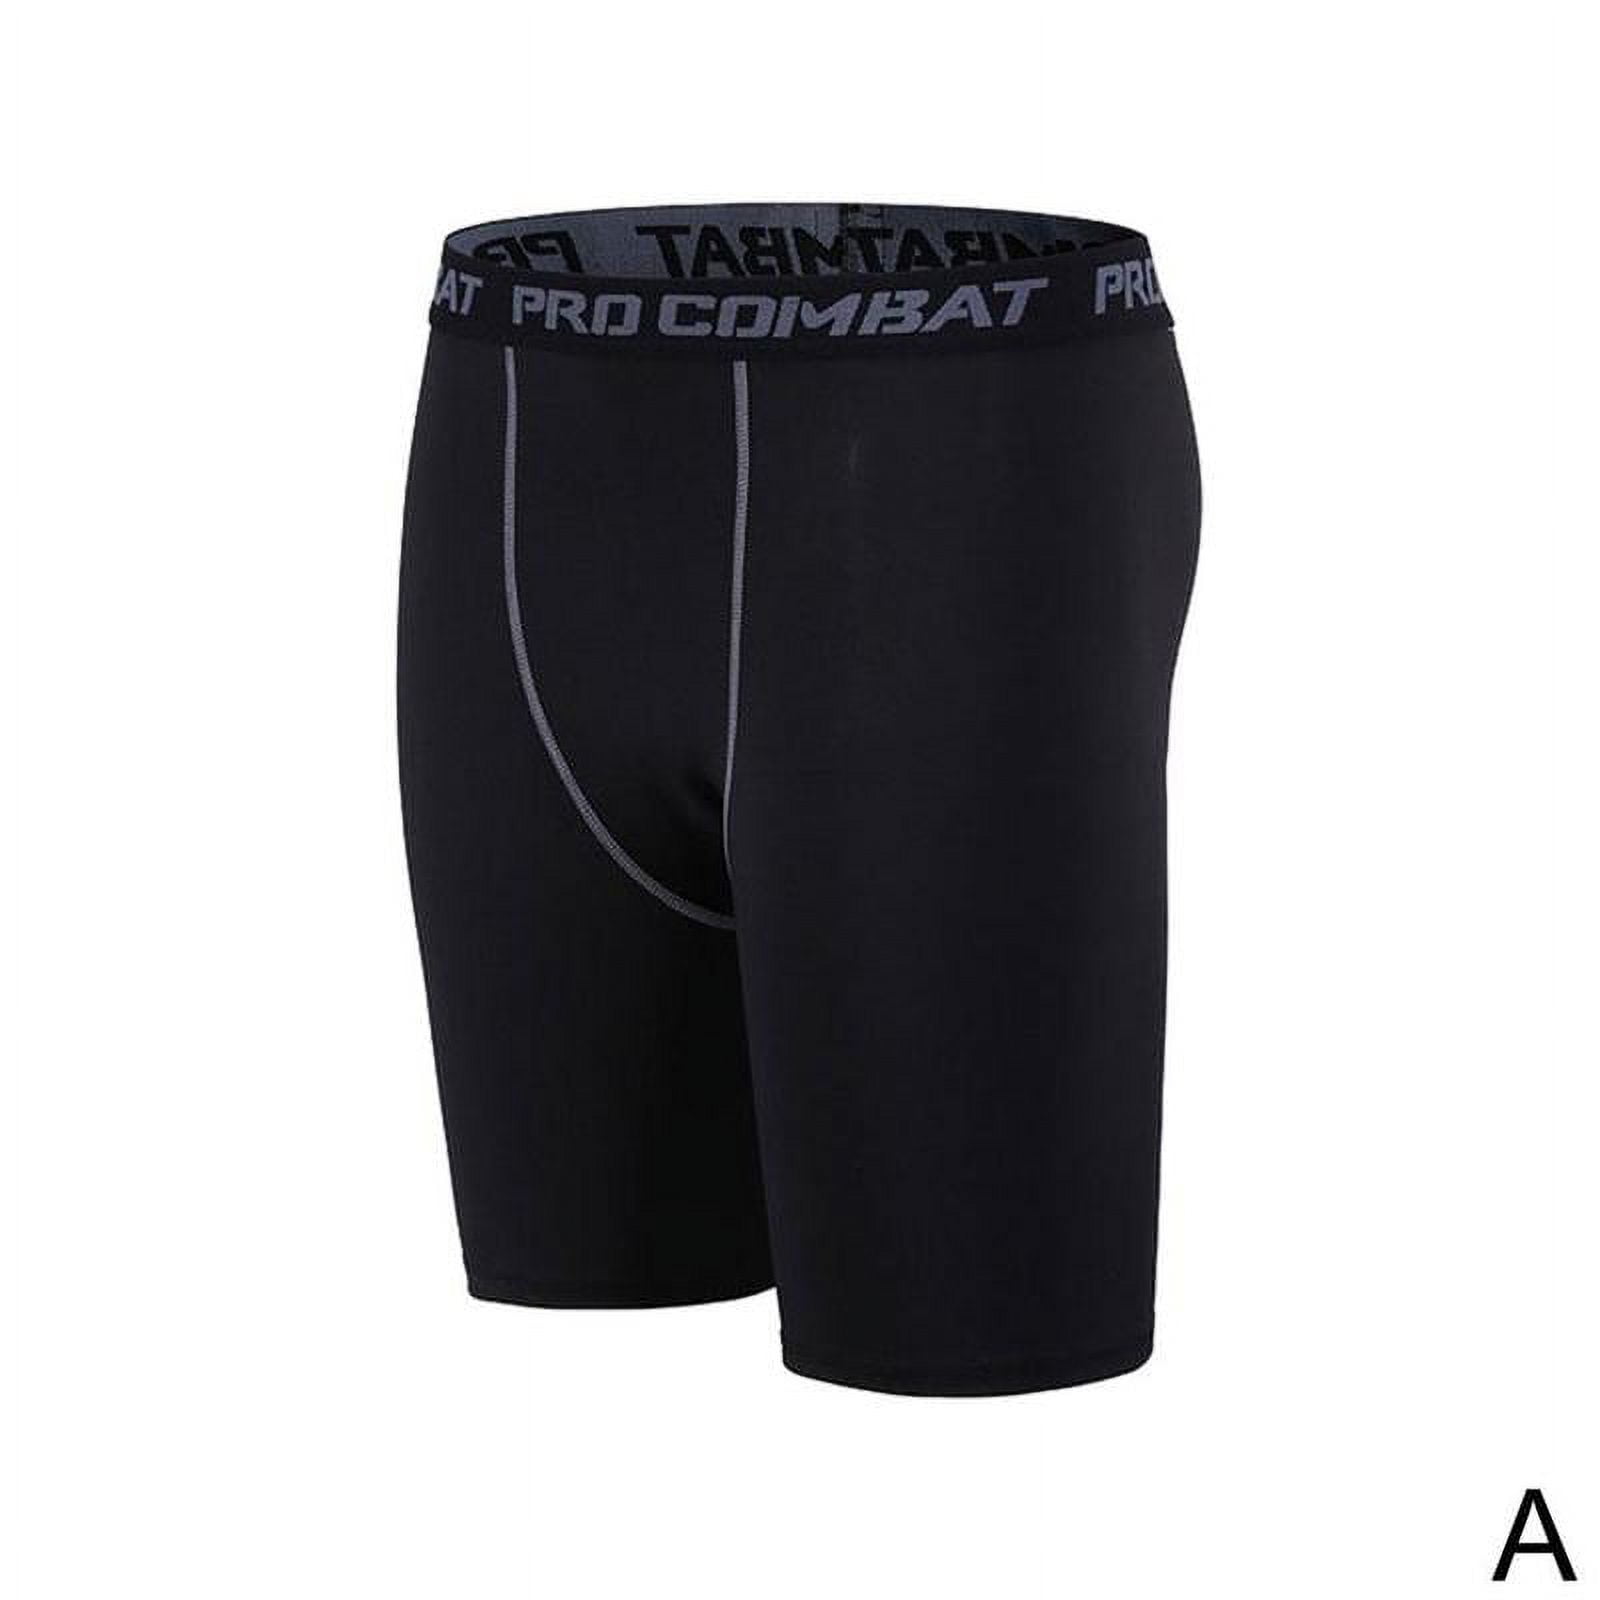 RDX Compression Pant Men - Cool Dry Gym Leggings - Active Athletic